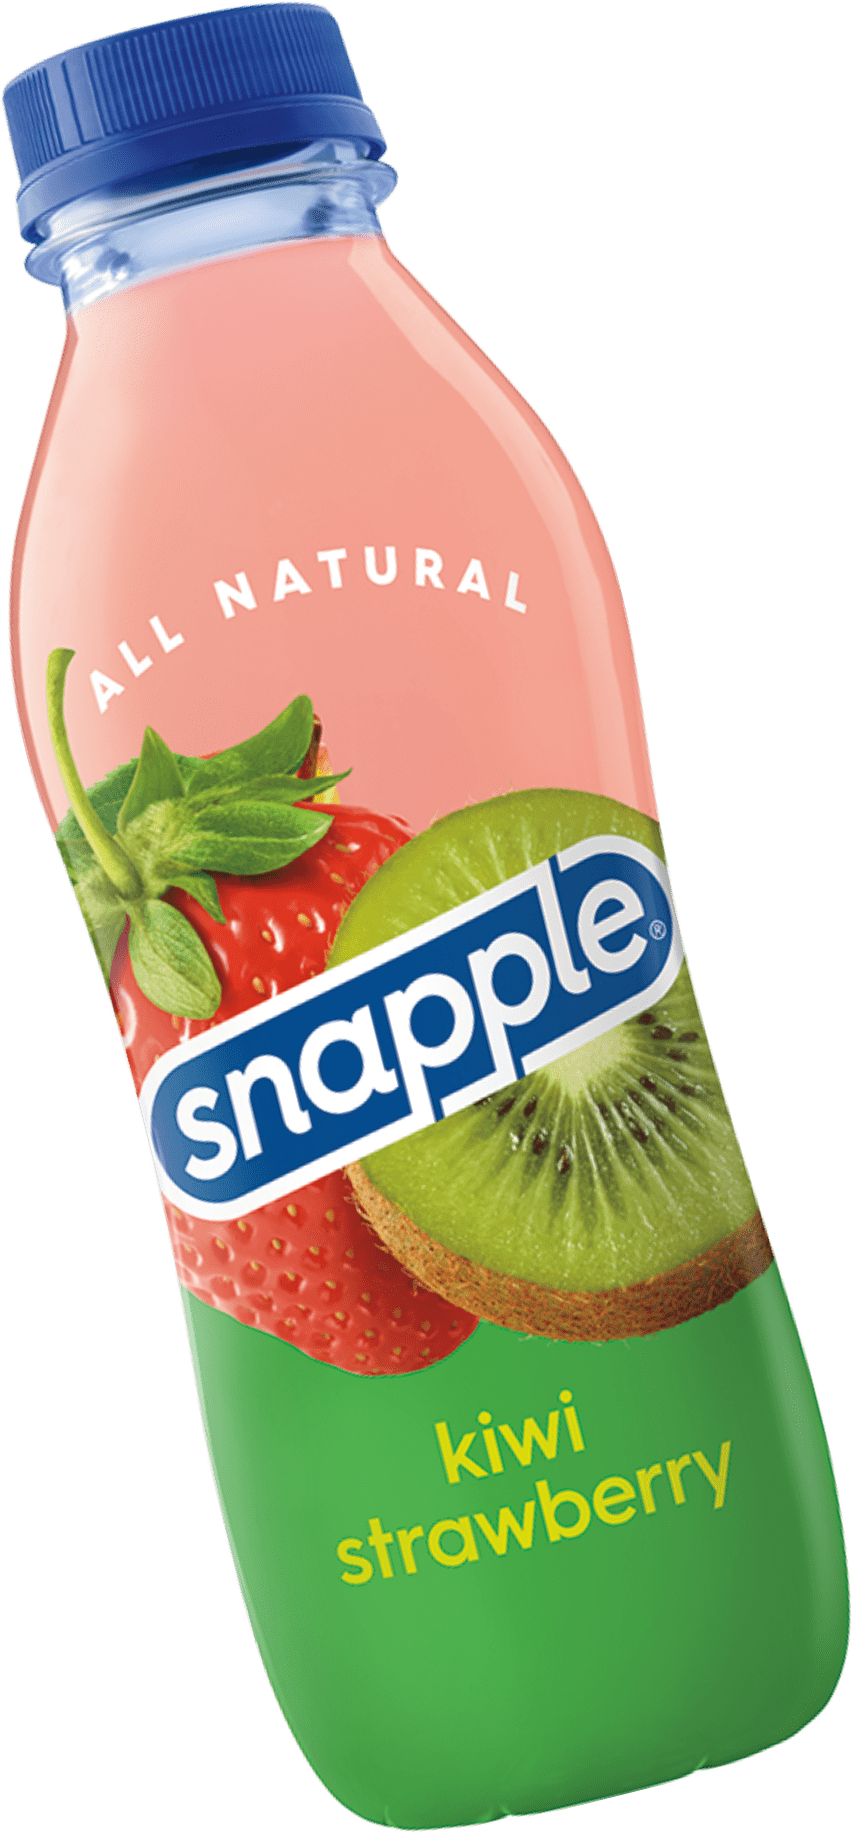 Snapple의 키위 딸기 음료의 새로운 재활용 플라스틱 병 전시